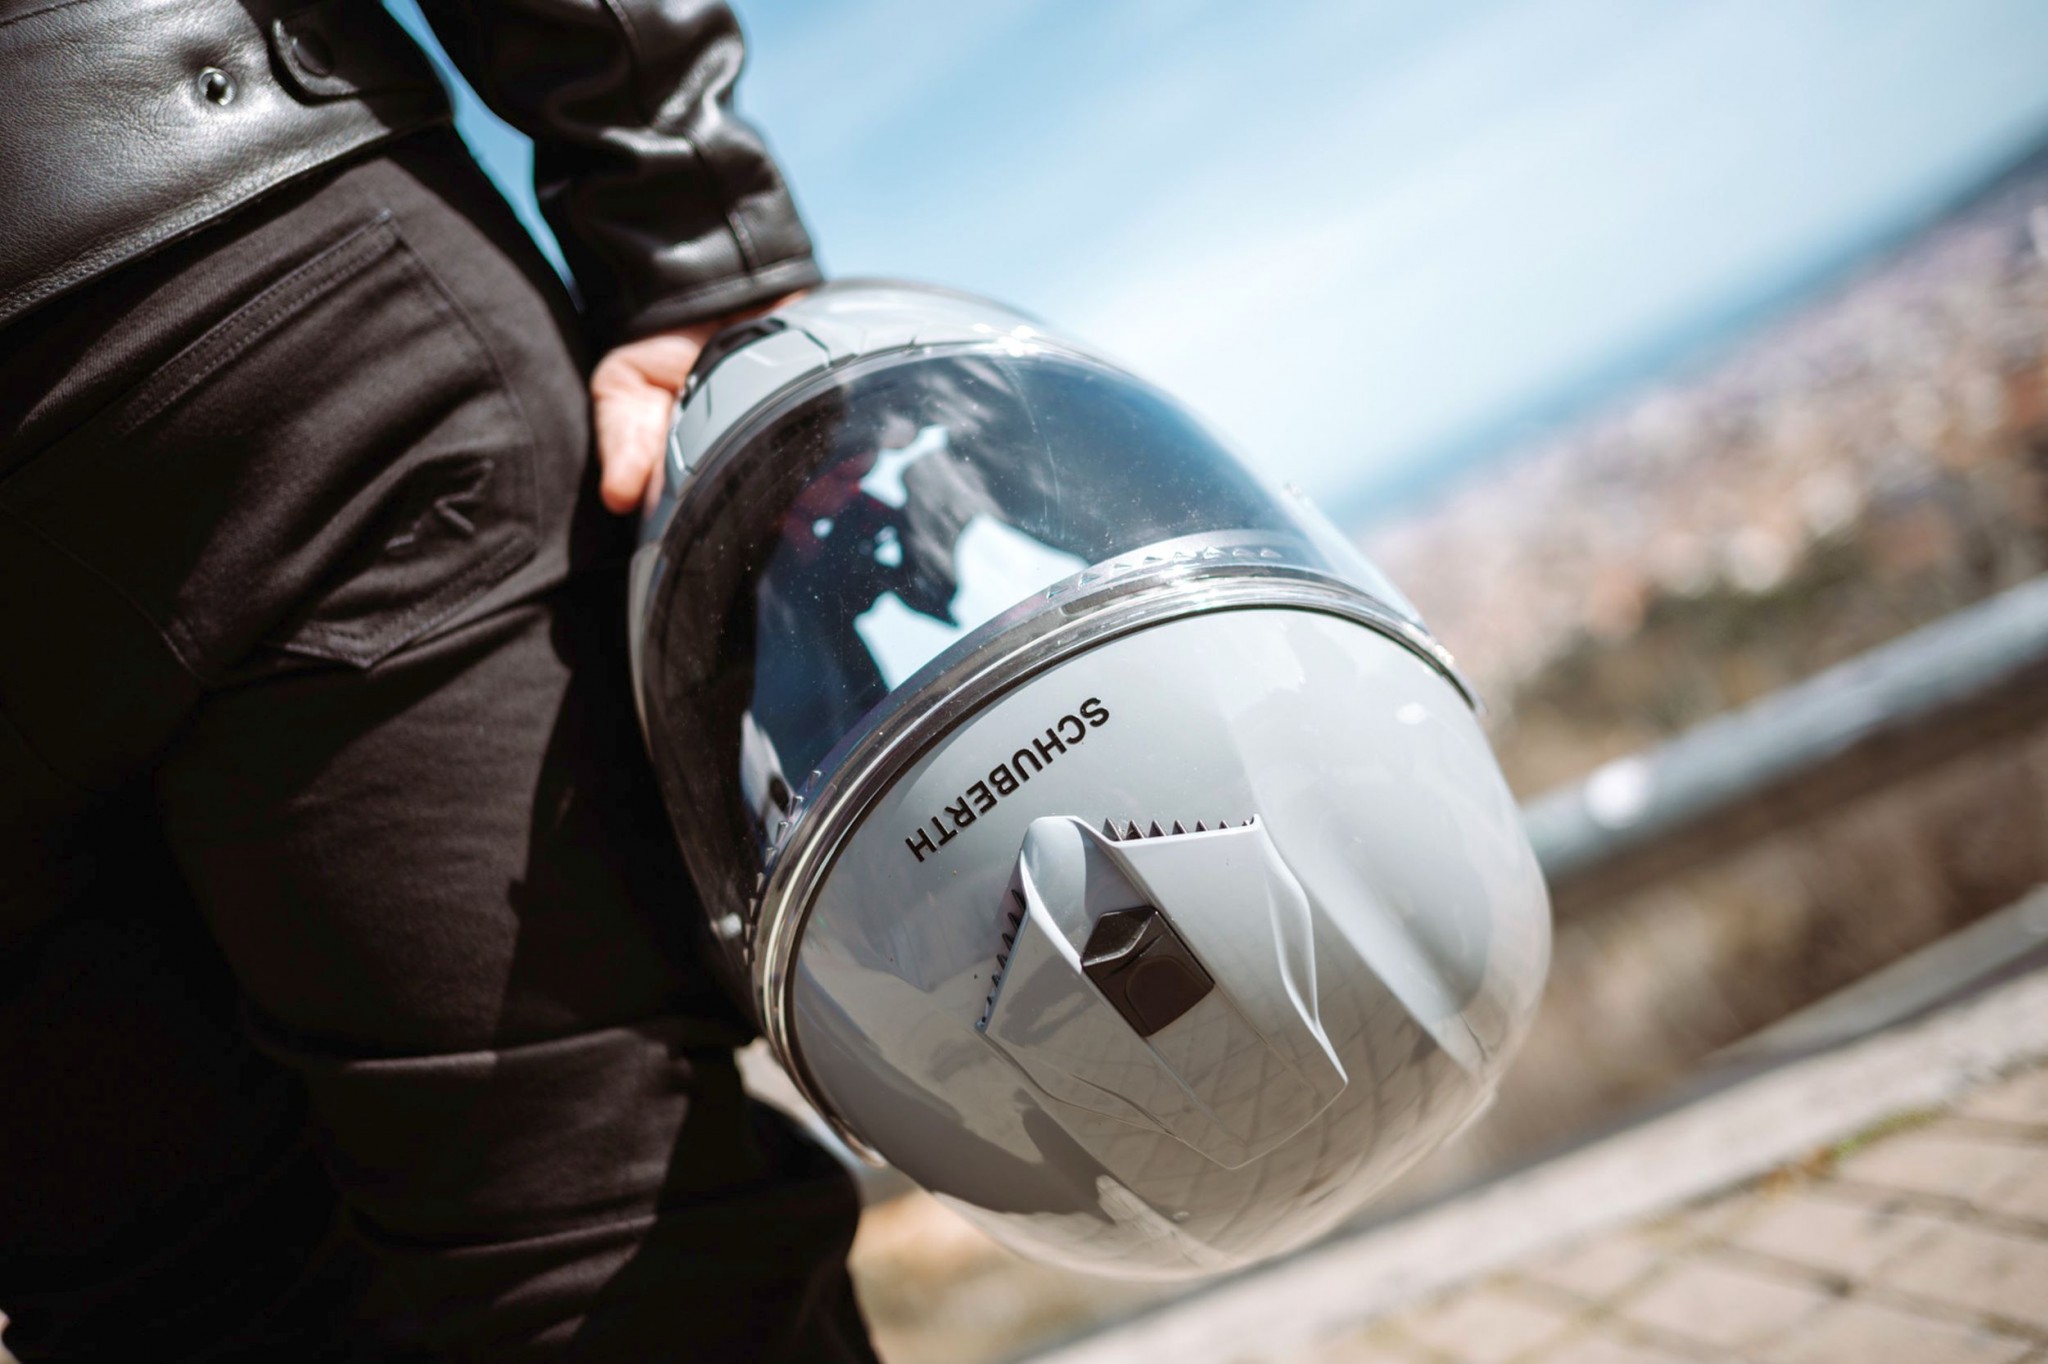 Teste do capacete de turismo desportivo Schuberth S3 - Imagem 55